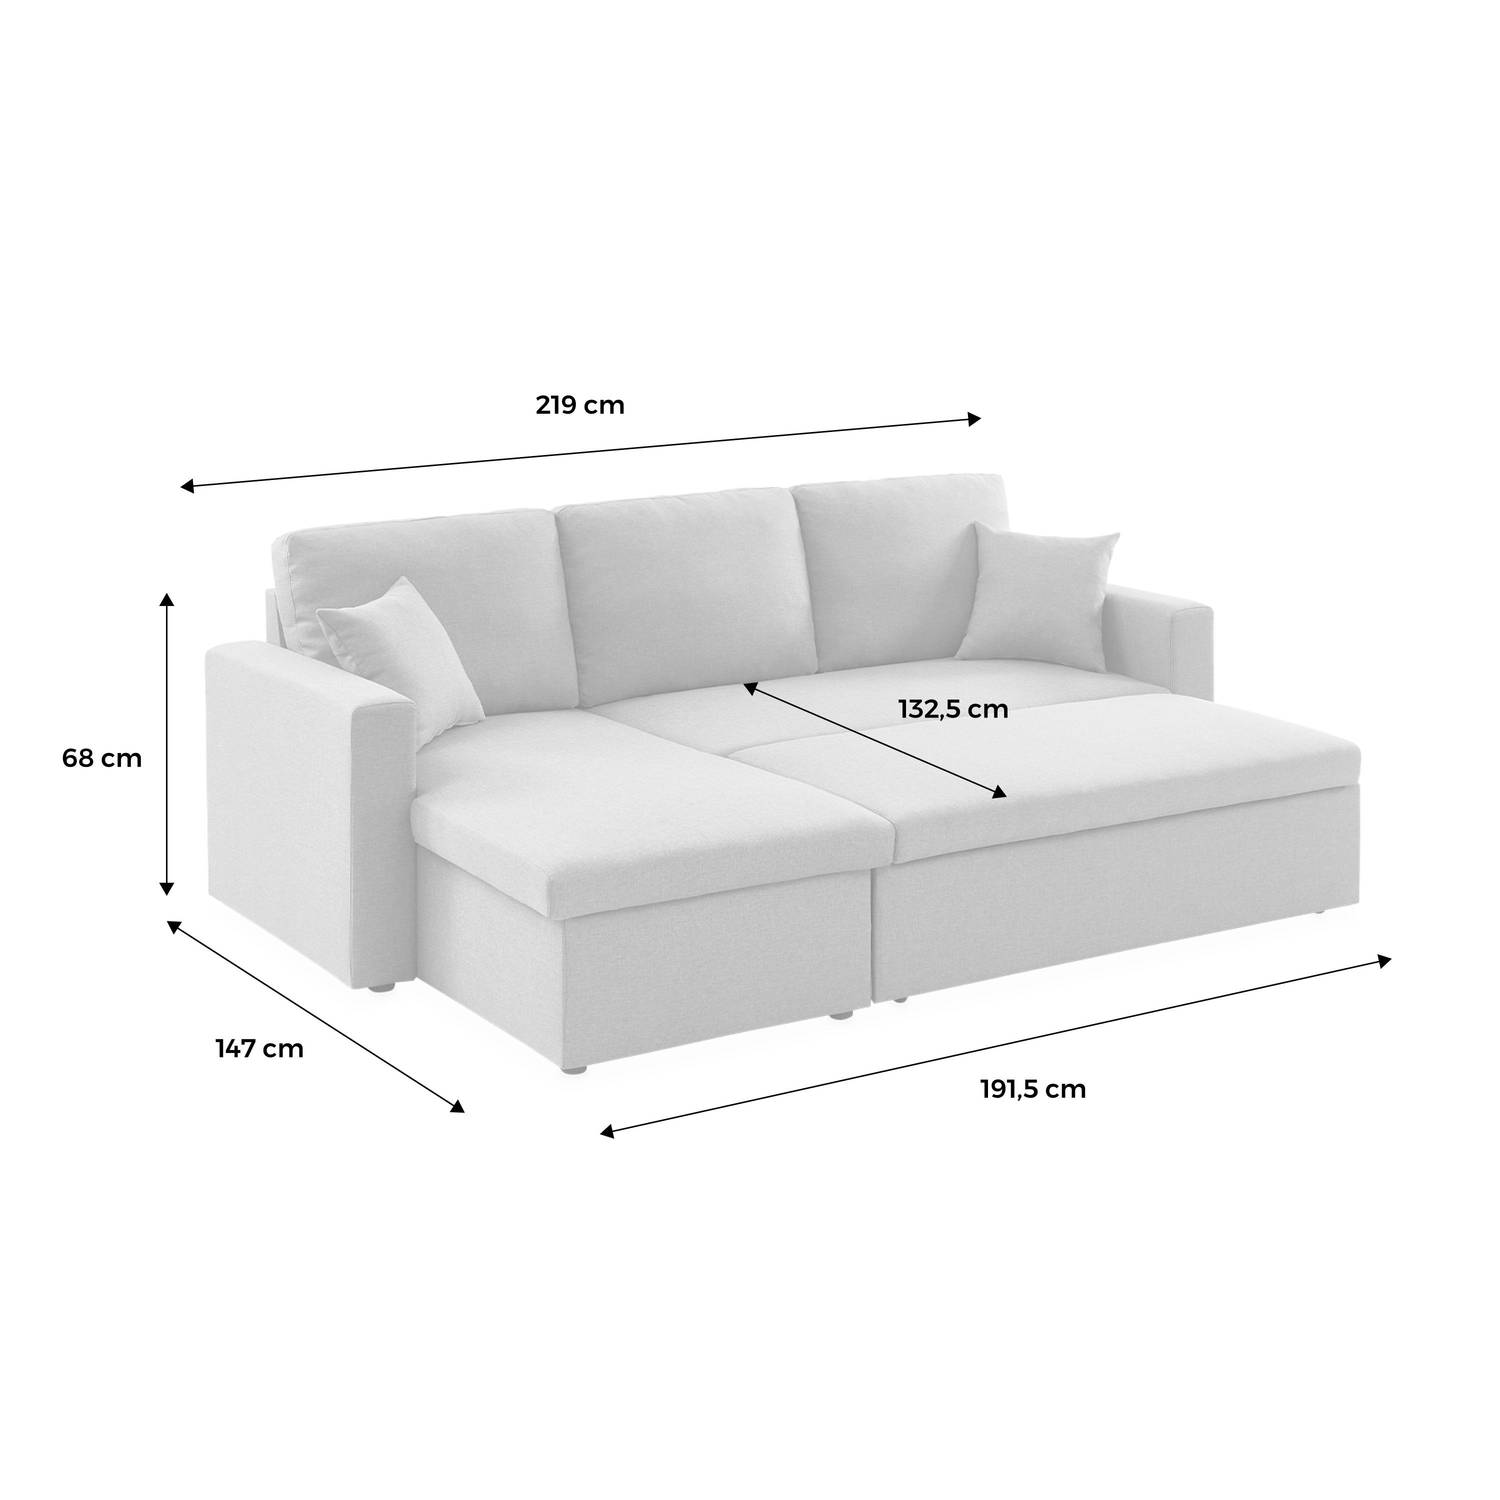 Stoffen lichtgrijze bedbank met chaise longue en opbergruimte - IDA - 3-zits, omkeerbare hoeksalon, opbergruimte, zetelbed Photo11